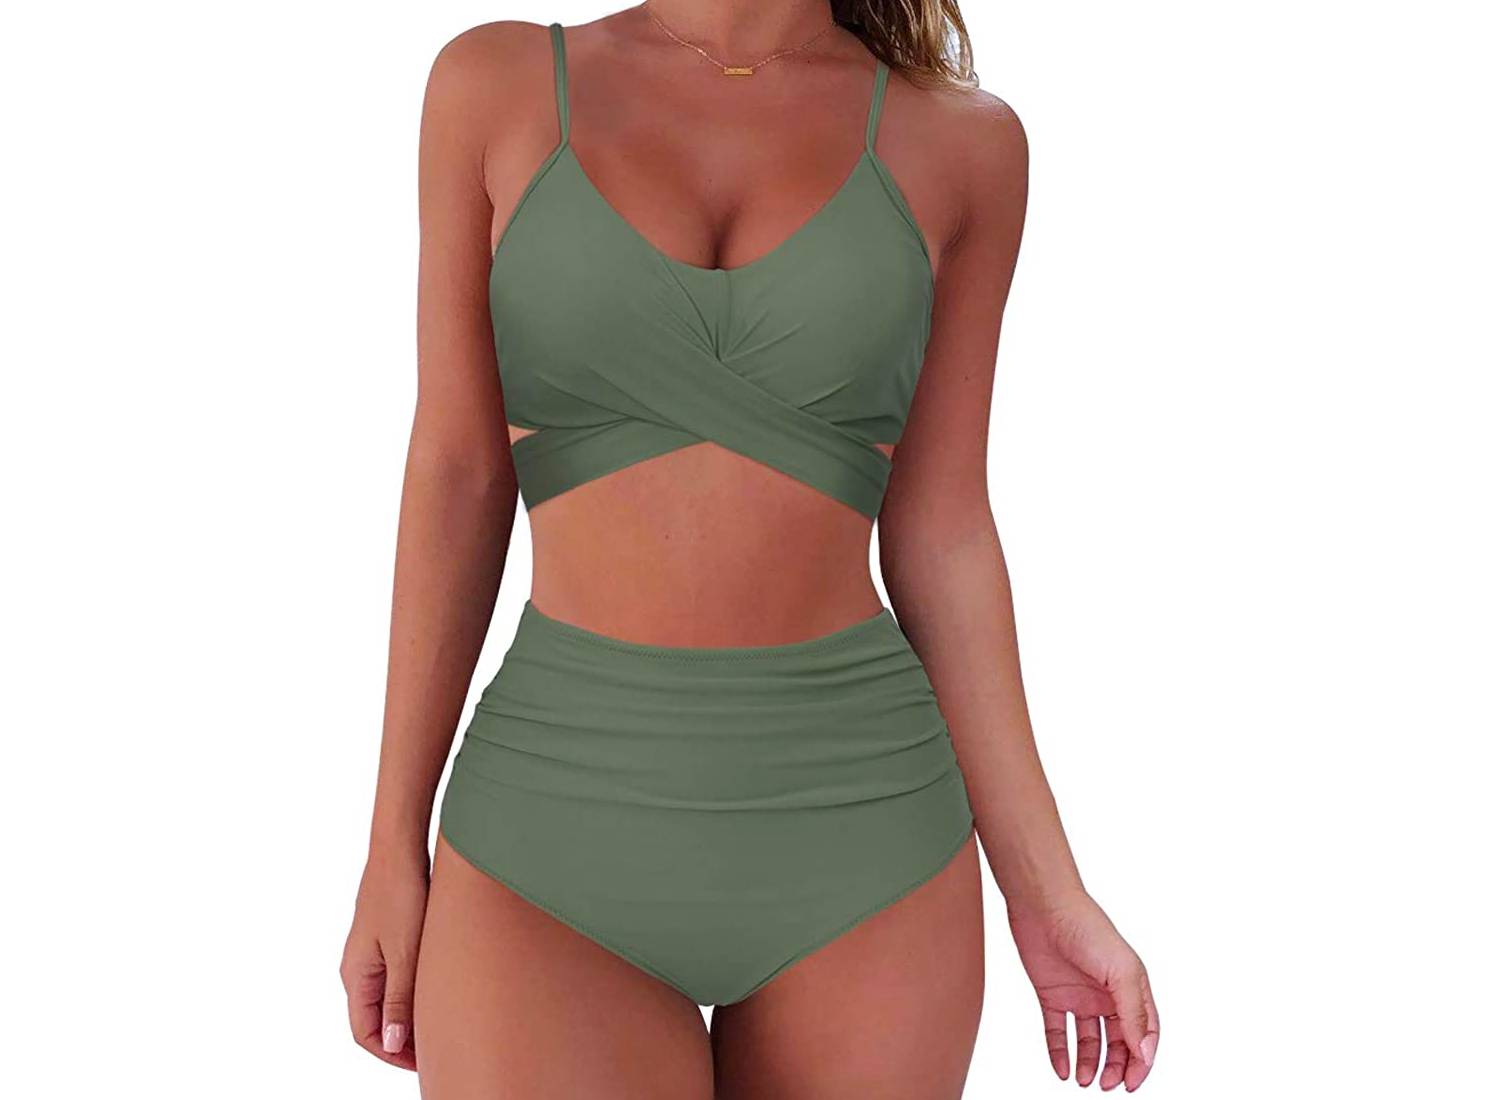 A woman wearing a green high-waisted bikini set